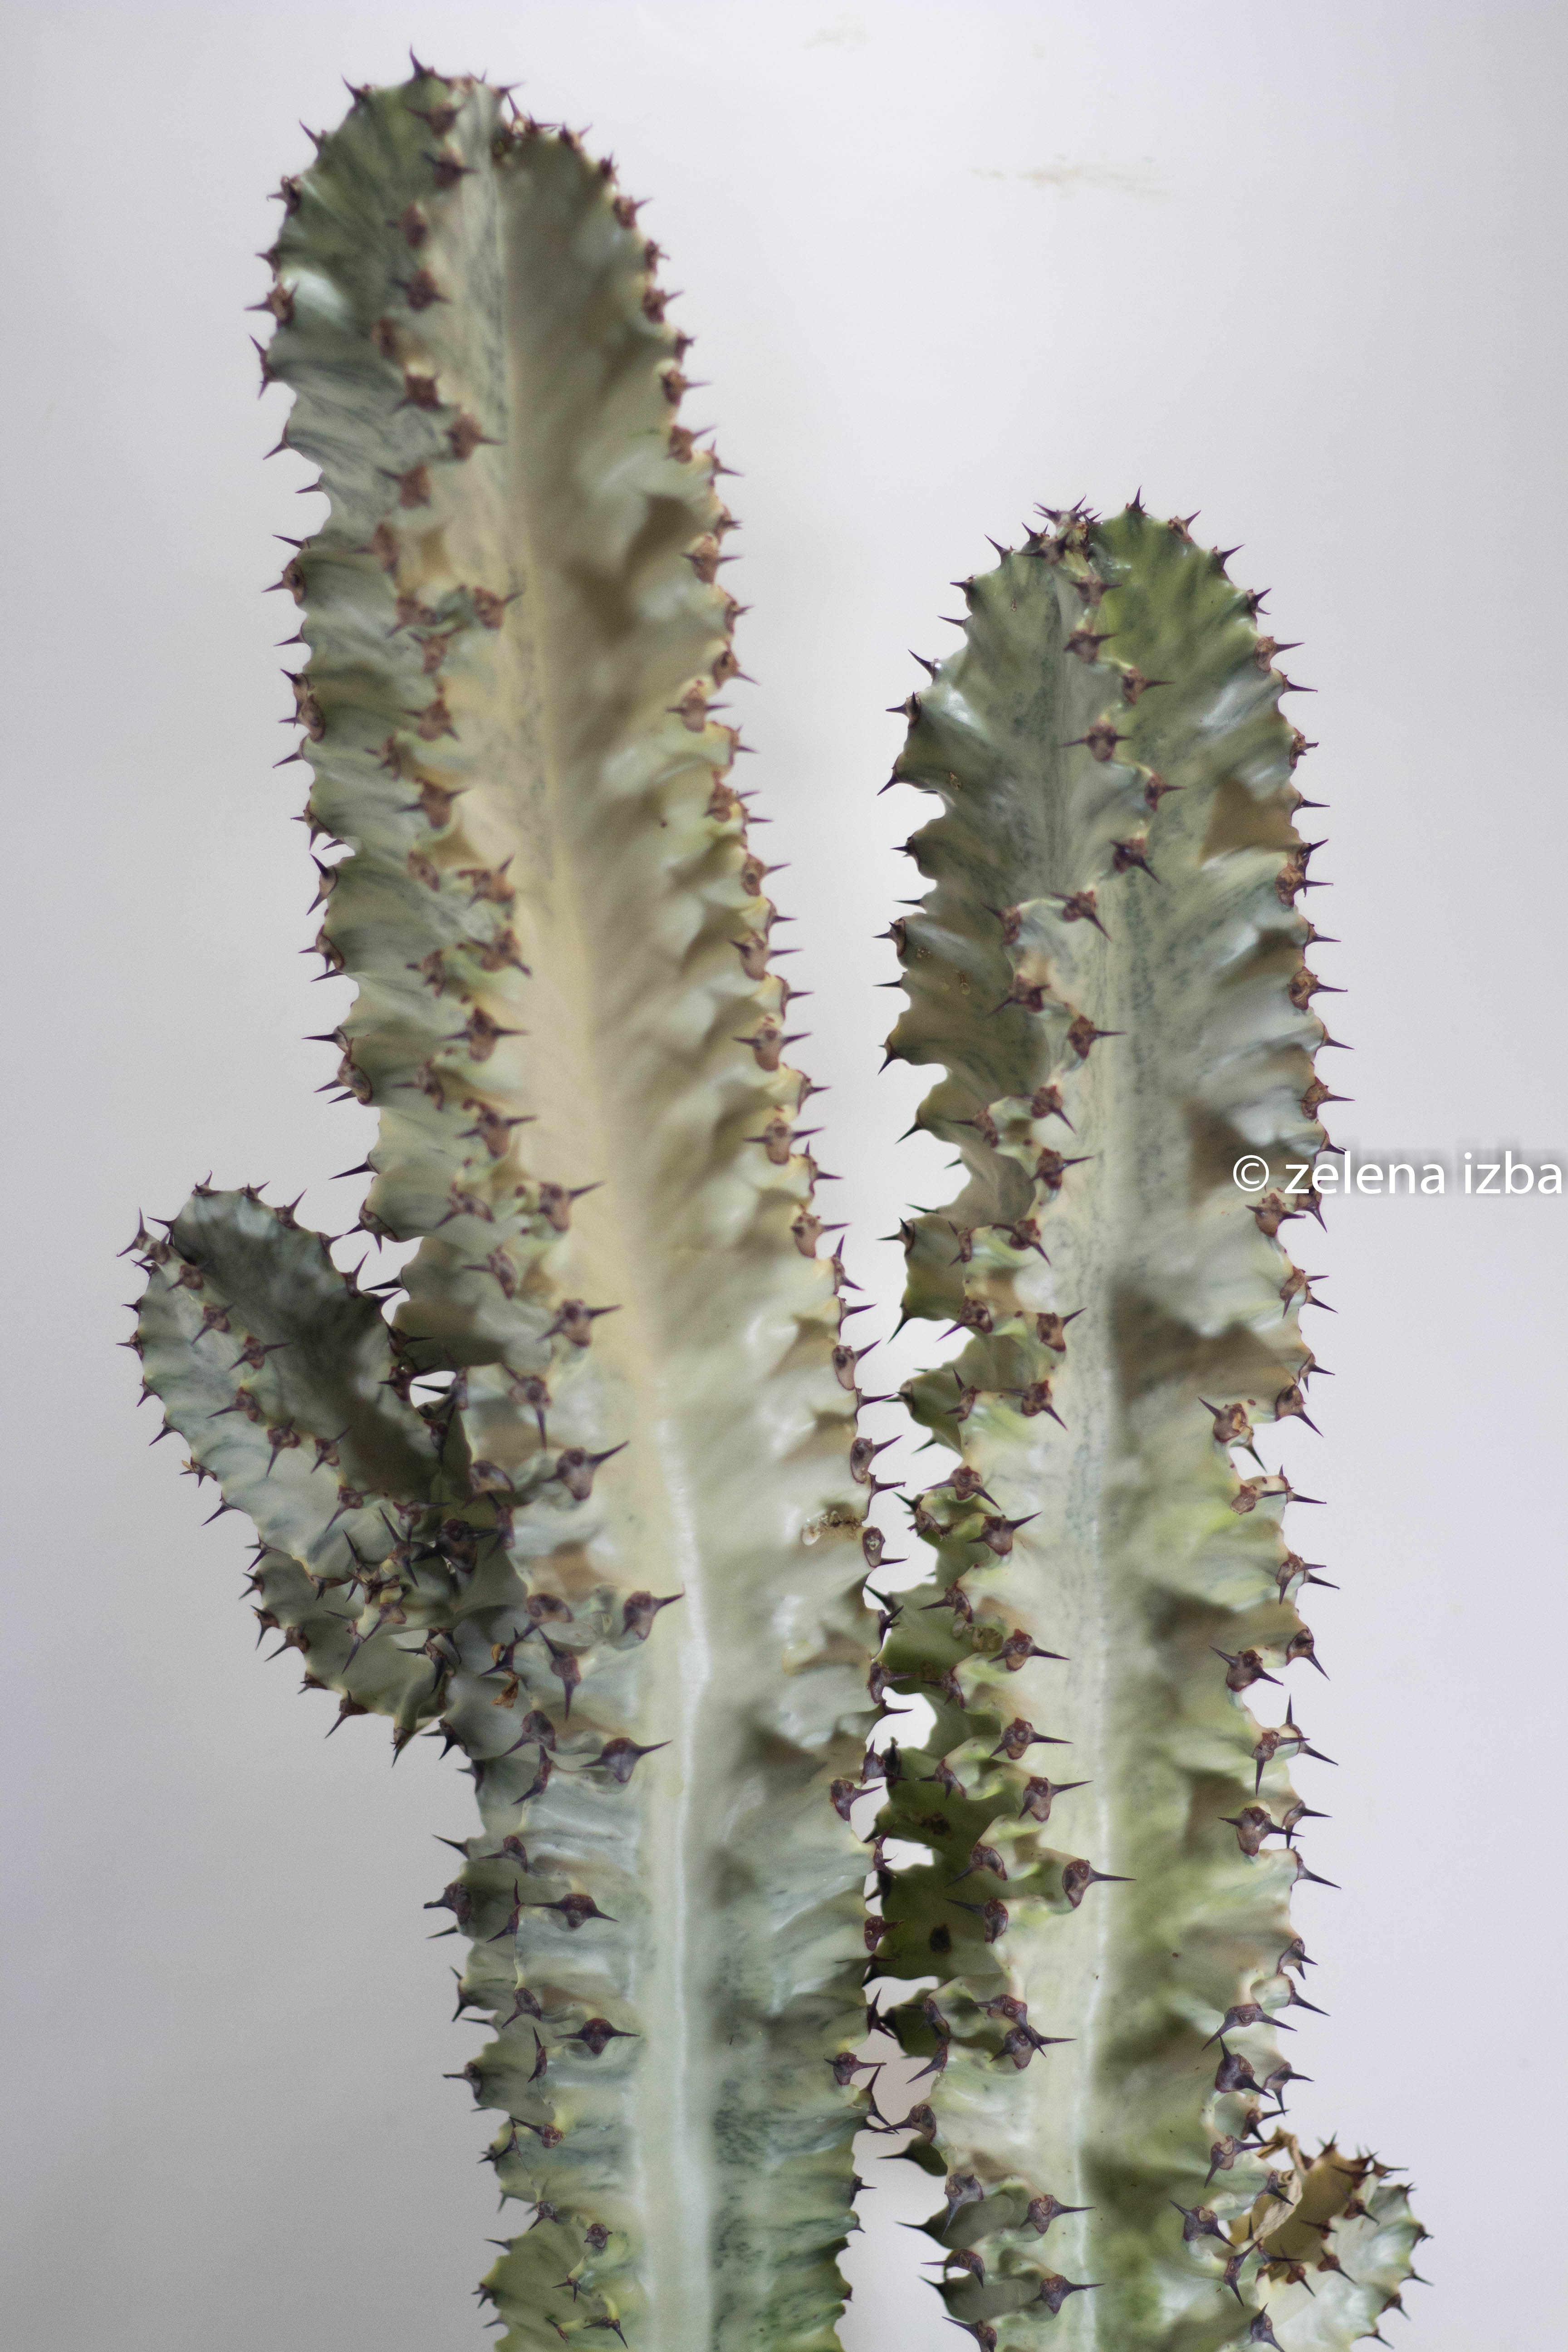 Euphorbia erythraea variegata "XL"